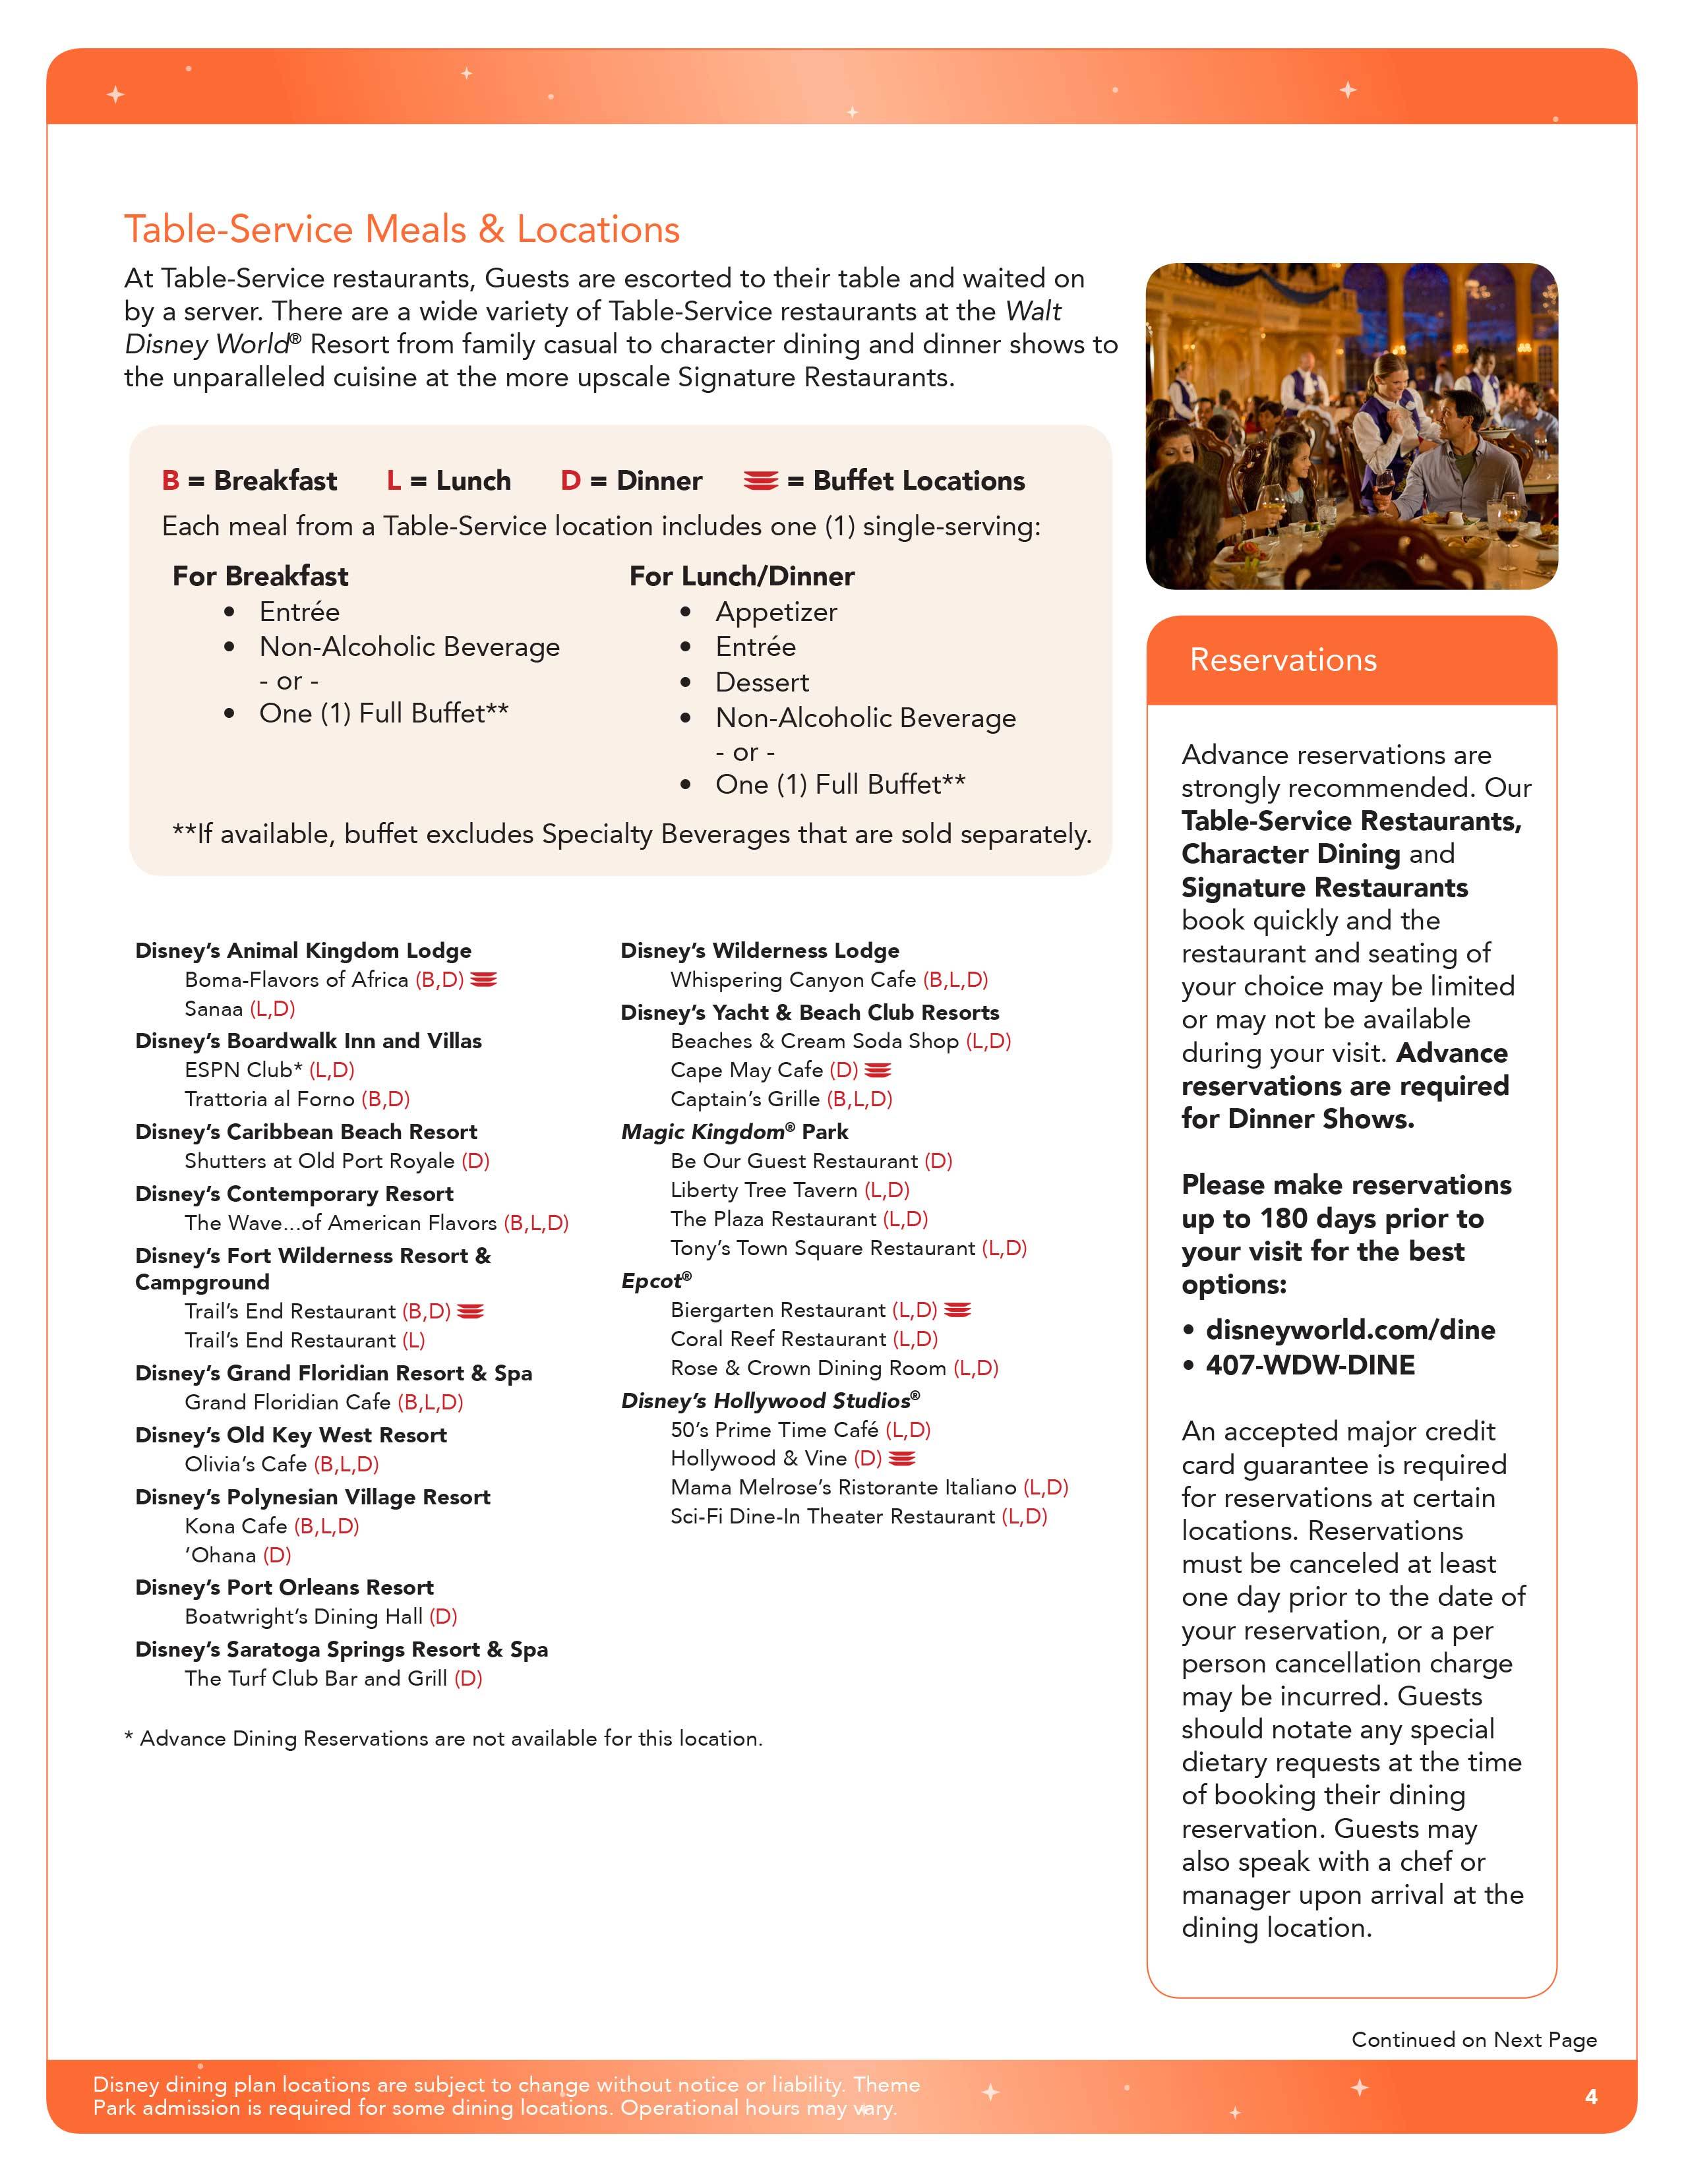 2016 Disney Premium Dining Plan brochure - Page 5